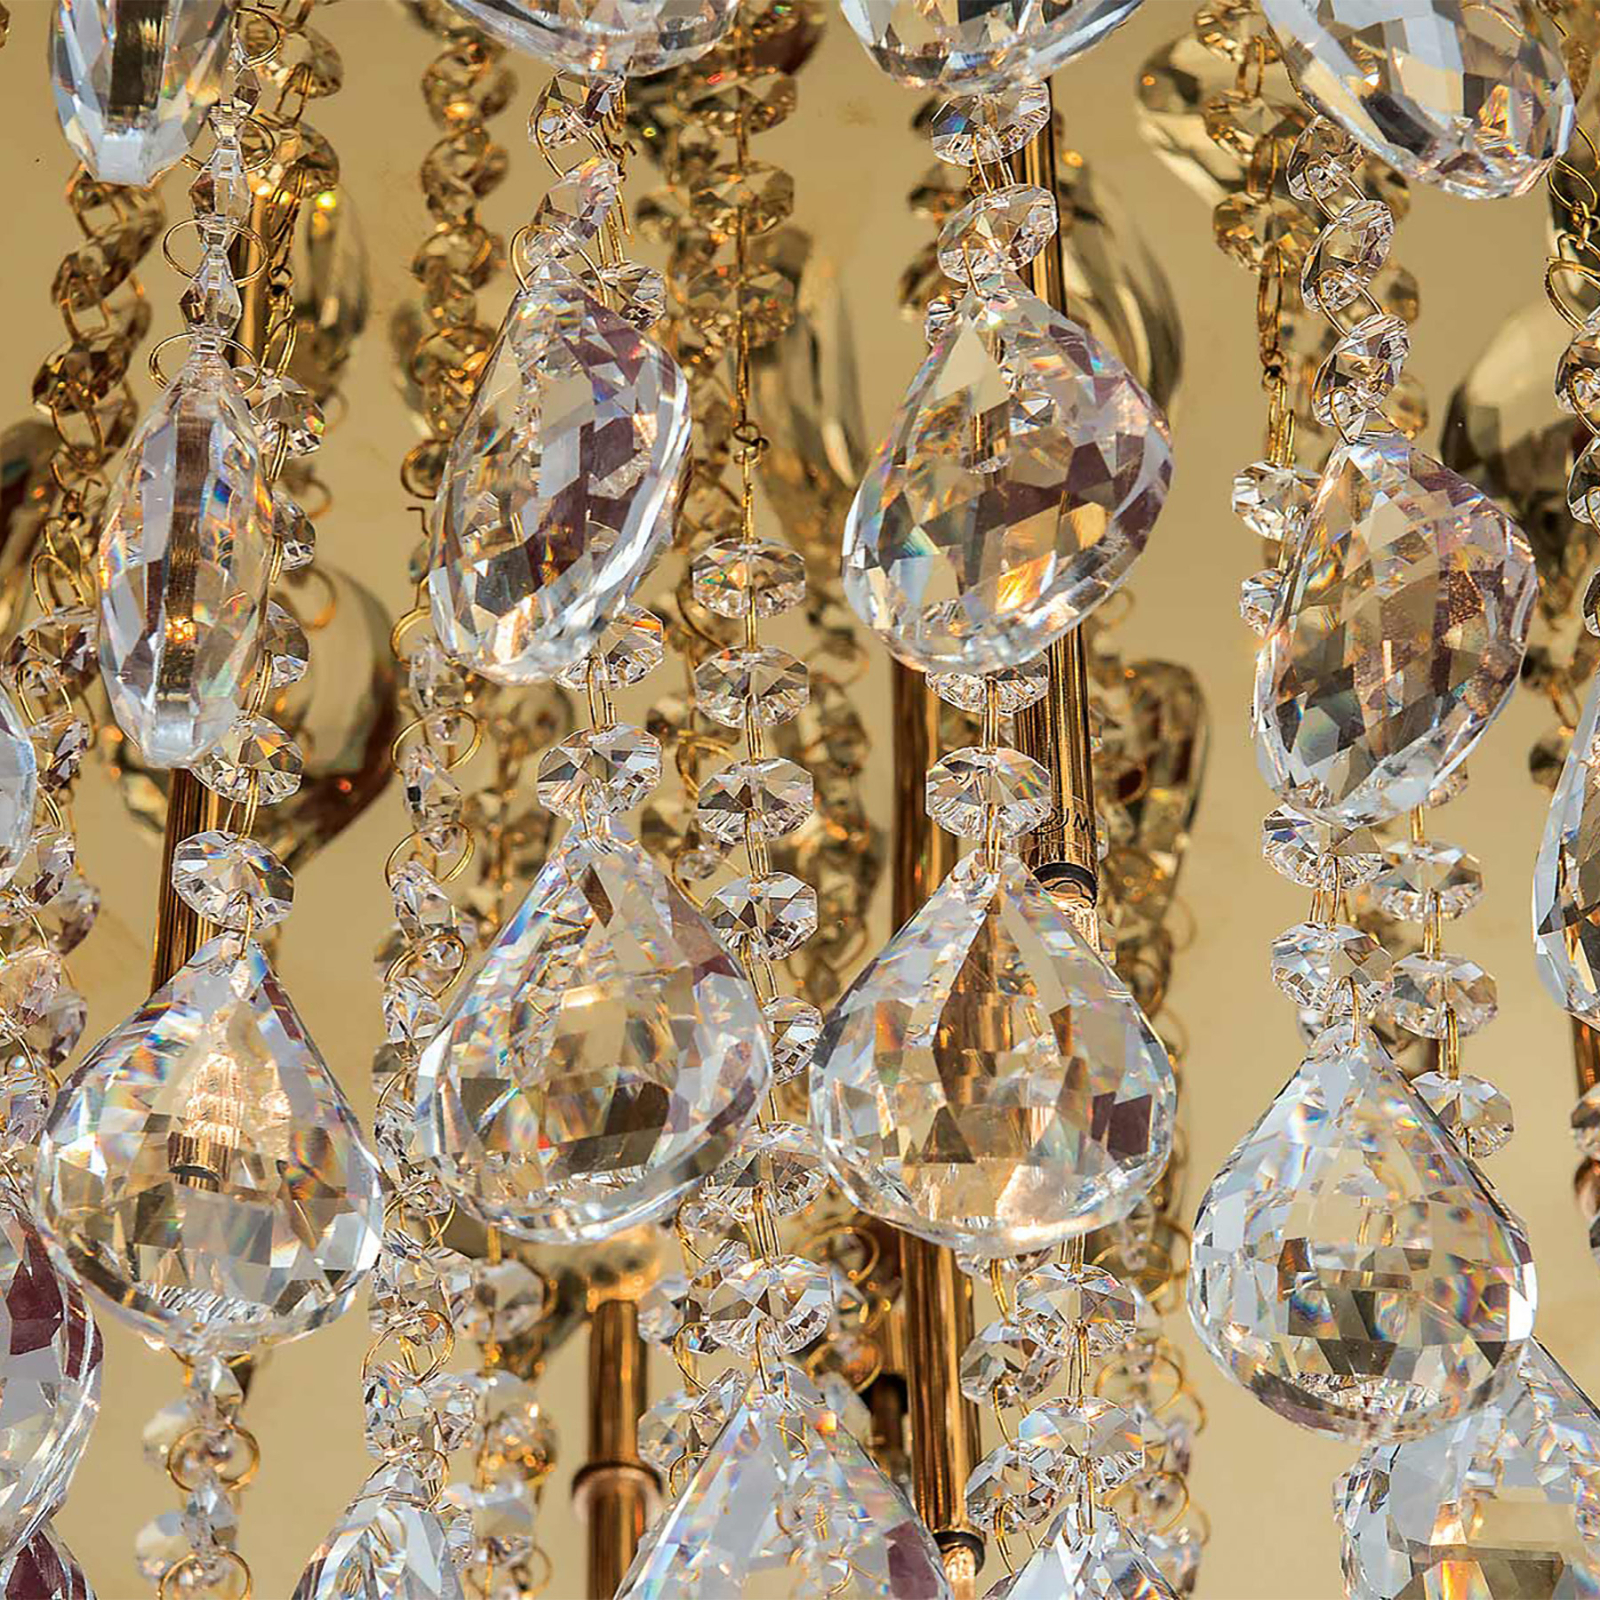 Celeste ceiling lamp with K9 crystals, Ø45cm, gold